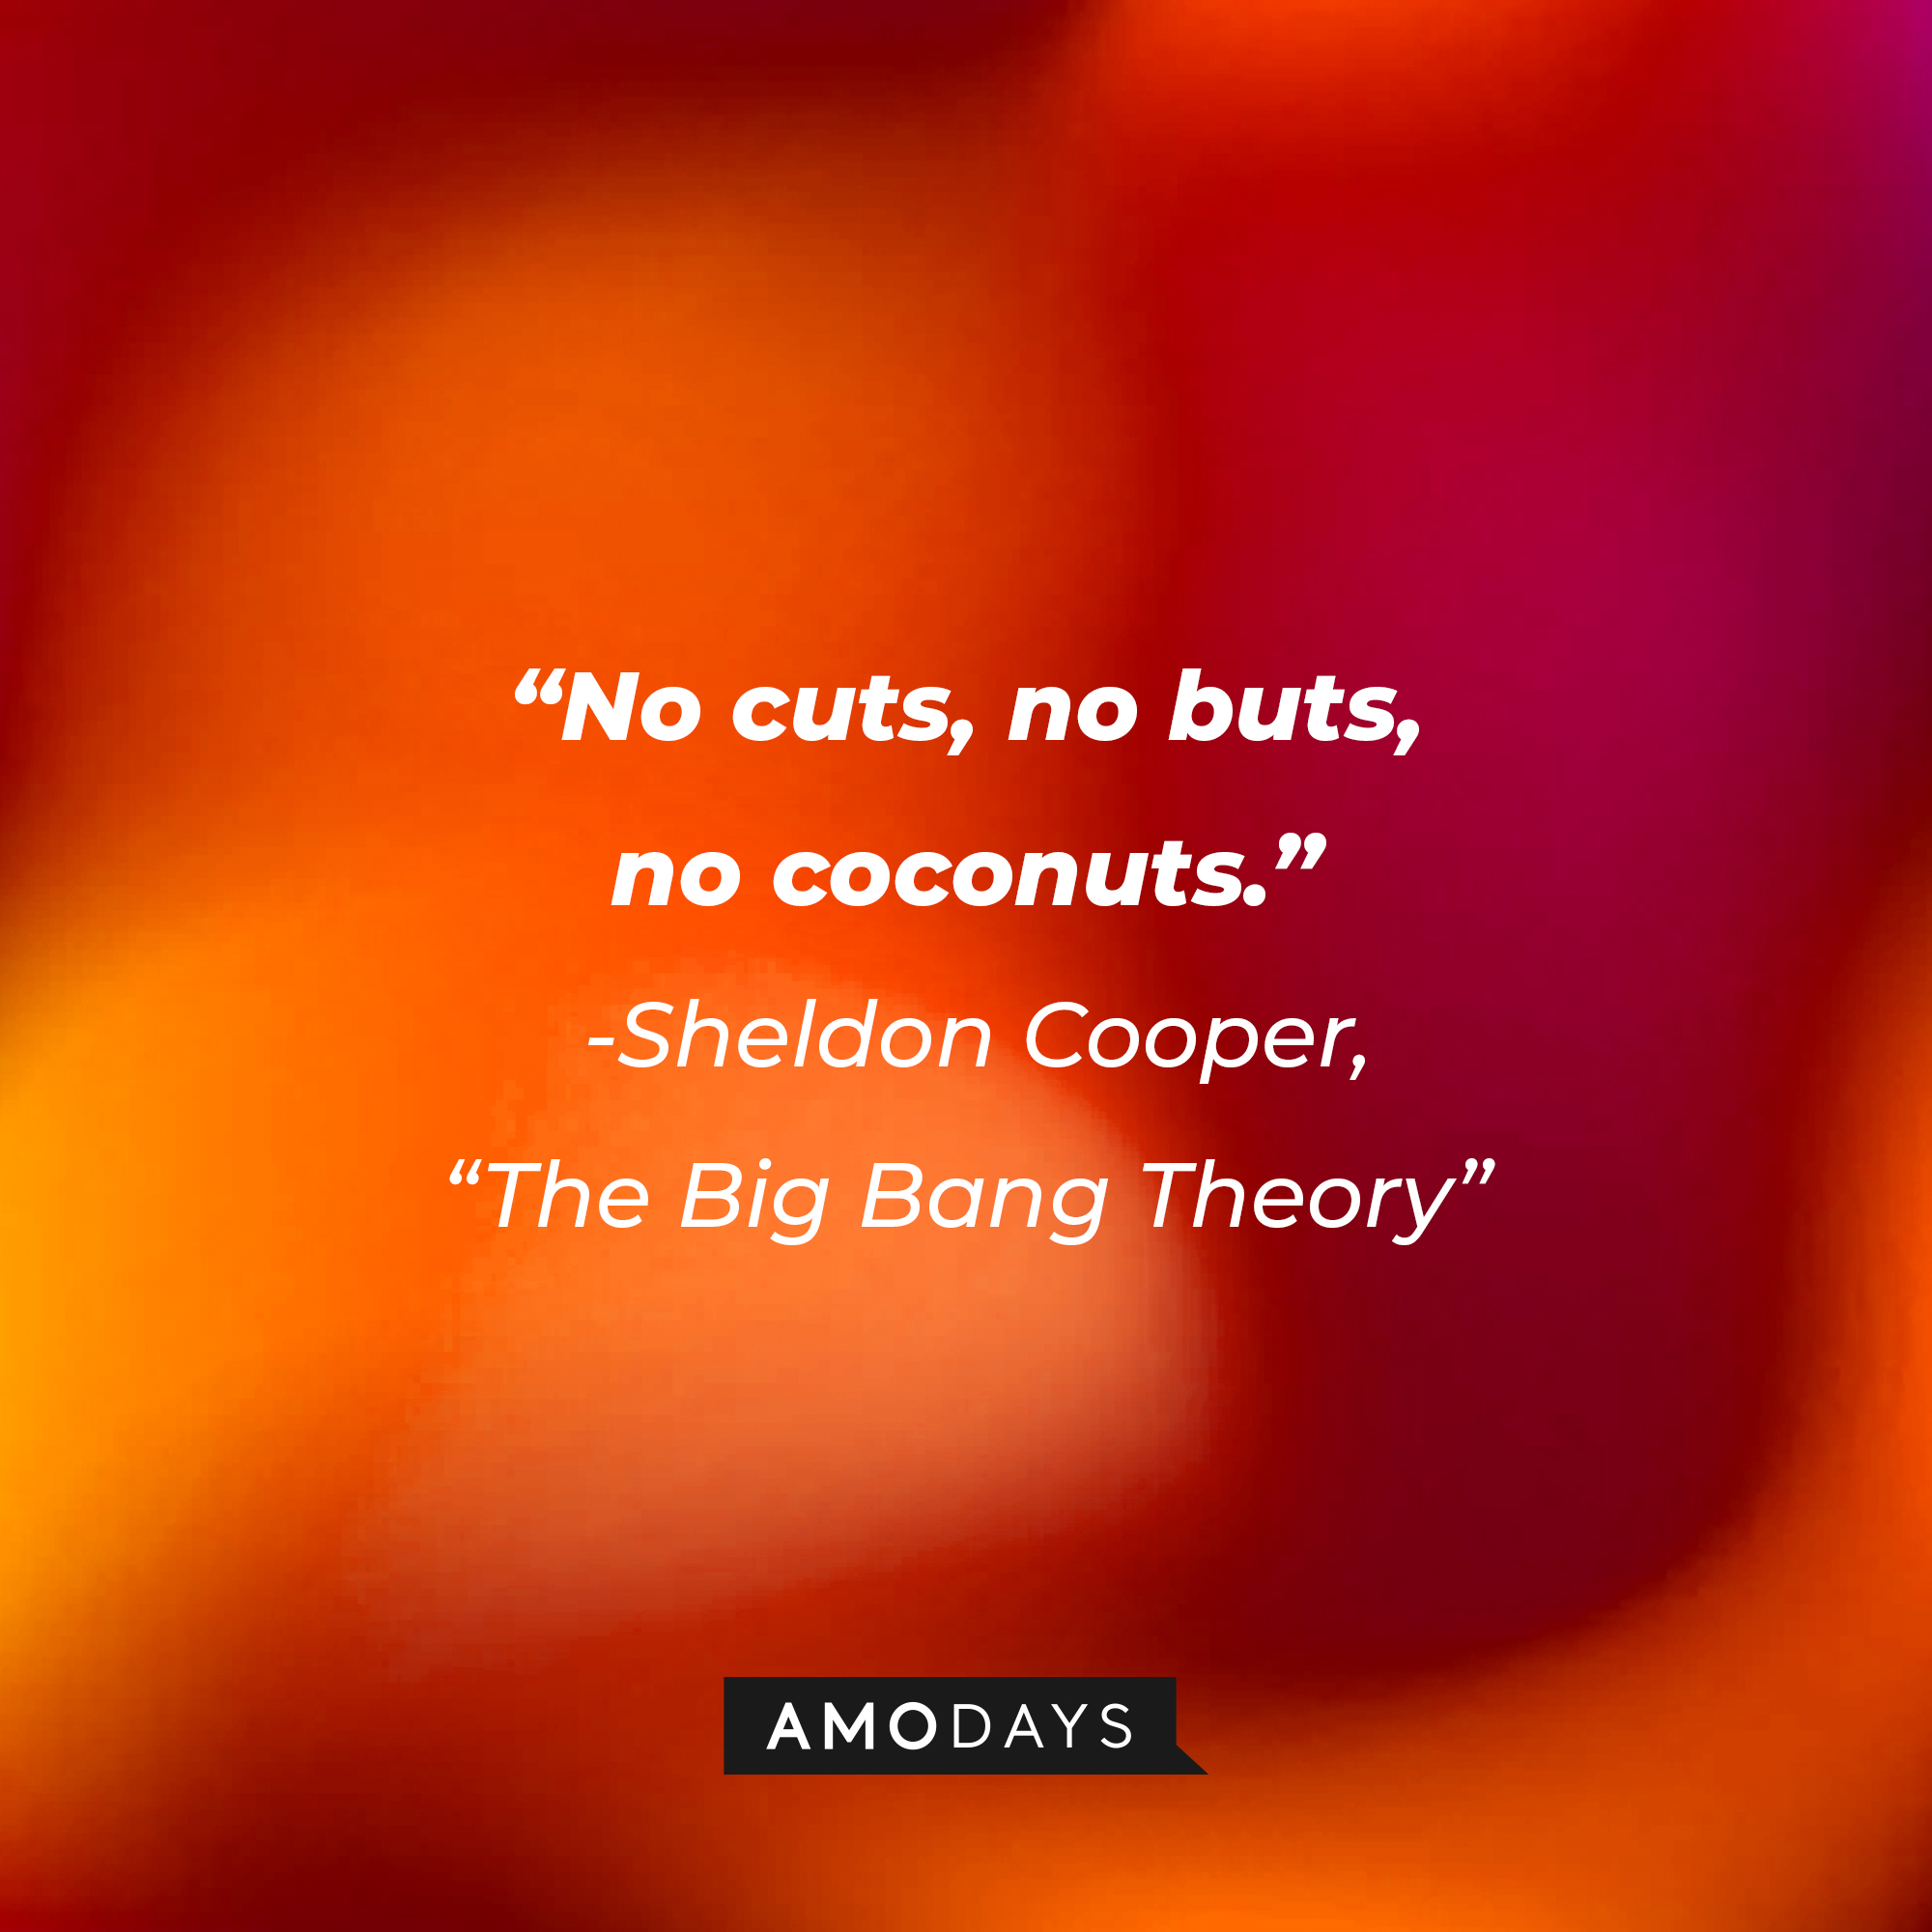 Sheldon Cooper's quote from "The Big Bang Theory": "No cuts, no buts, no coconuts." | Source: Amodays